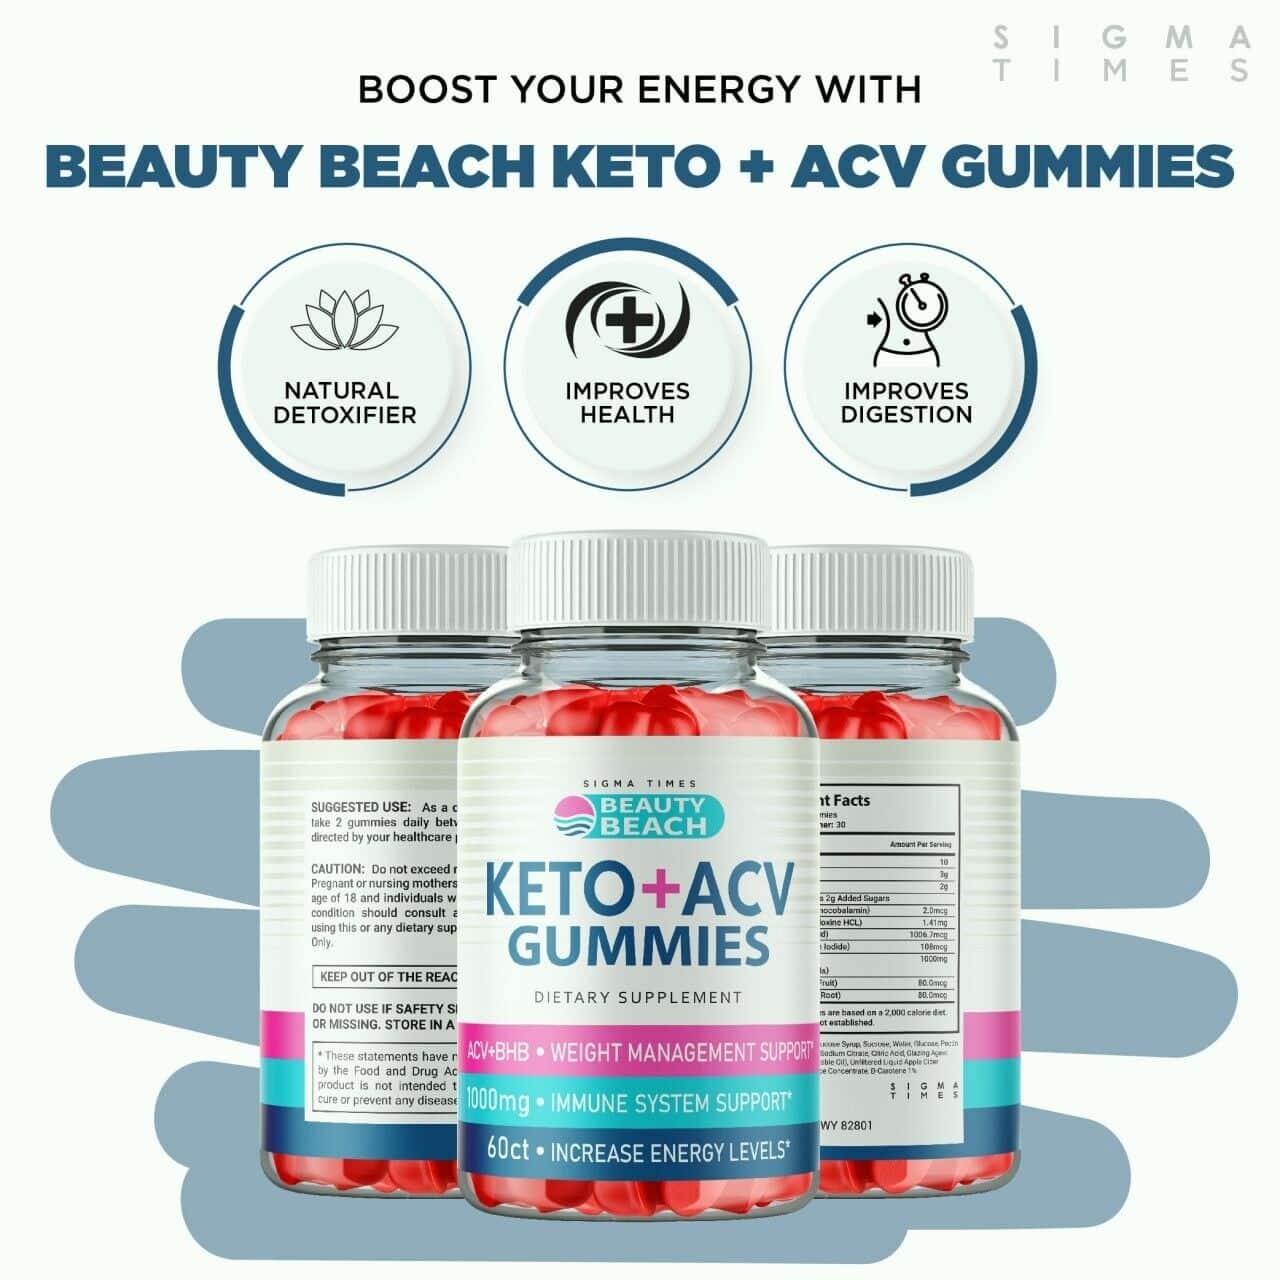 Beauty Beach Keto Gummies Benefits